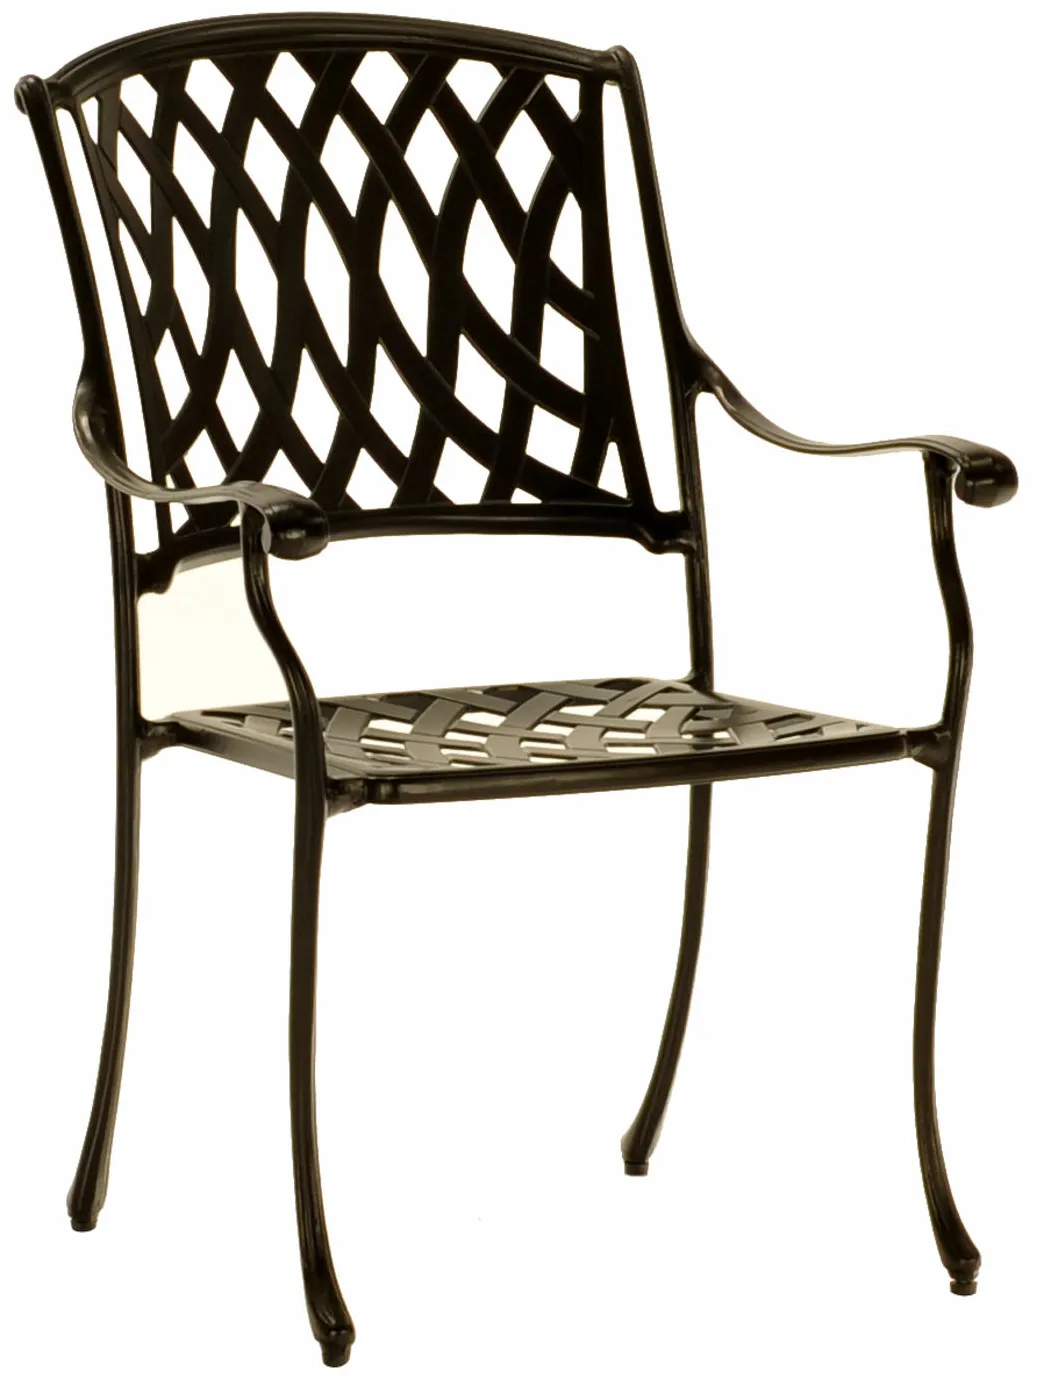 Bellmore Chair